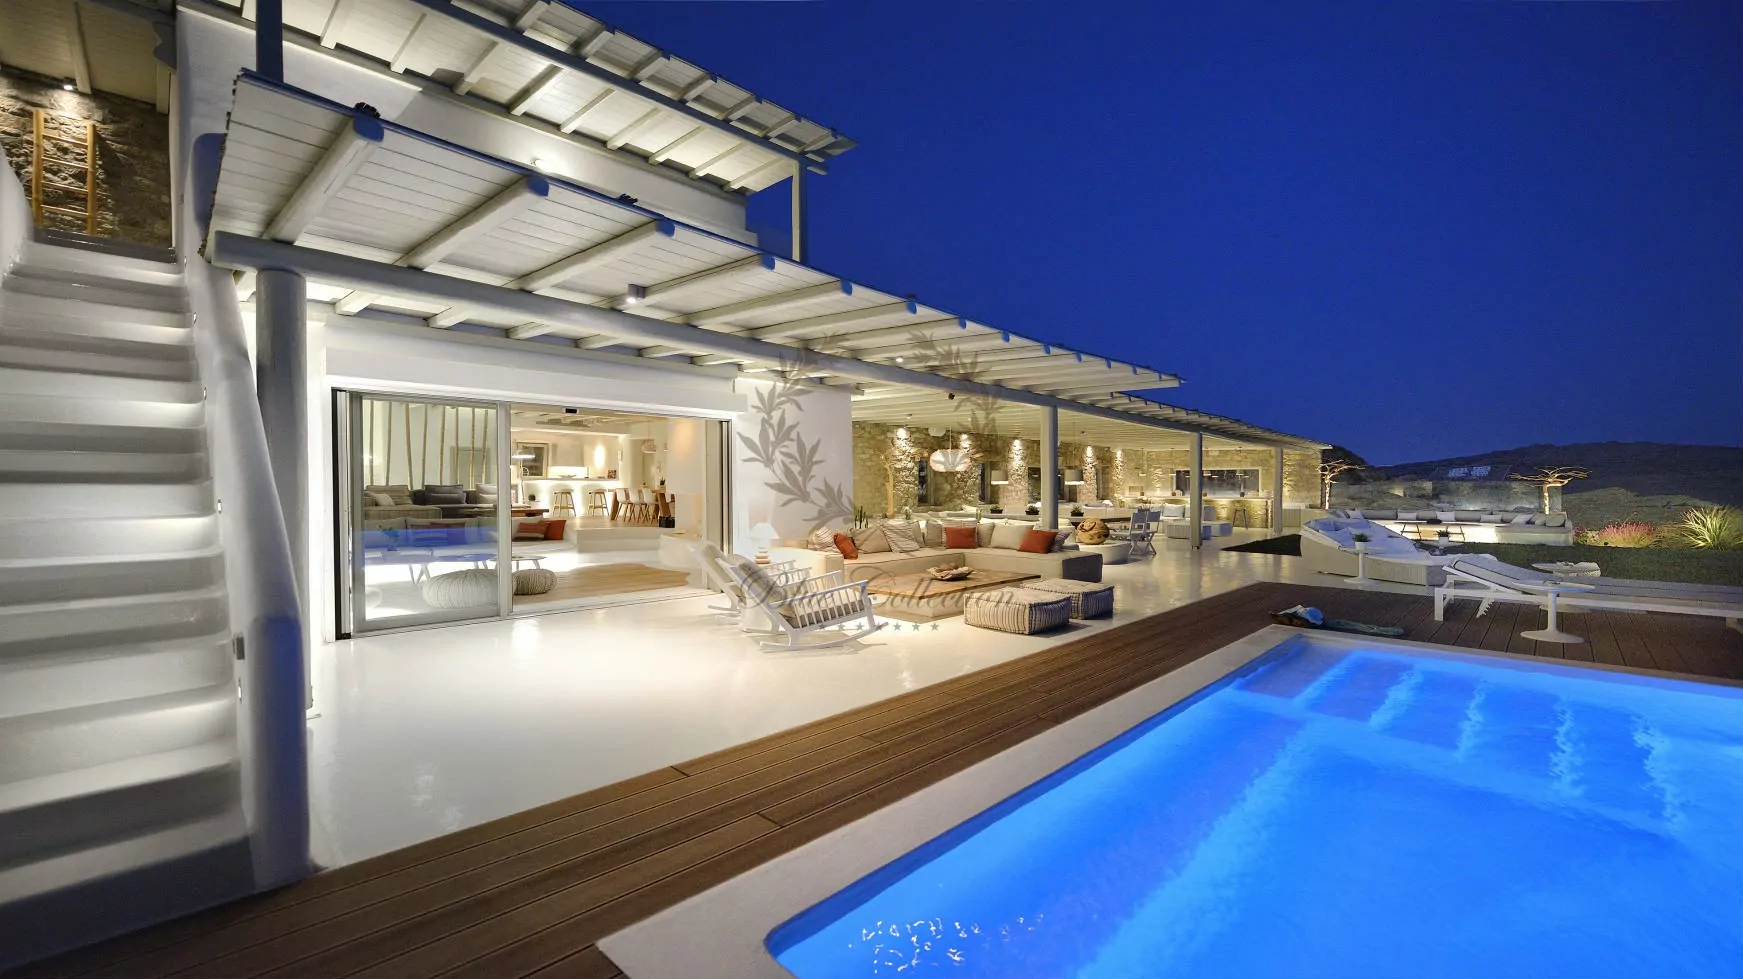 Mykonos - Greece | Elia – Luxurious Villa with Private Pool & Amazing views for rent | Sleeps 12 | 6 Bedrooms | 6 Bathrooms | REF: 180412126 | CODE: ELD-5